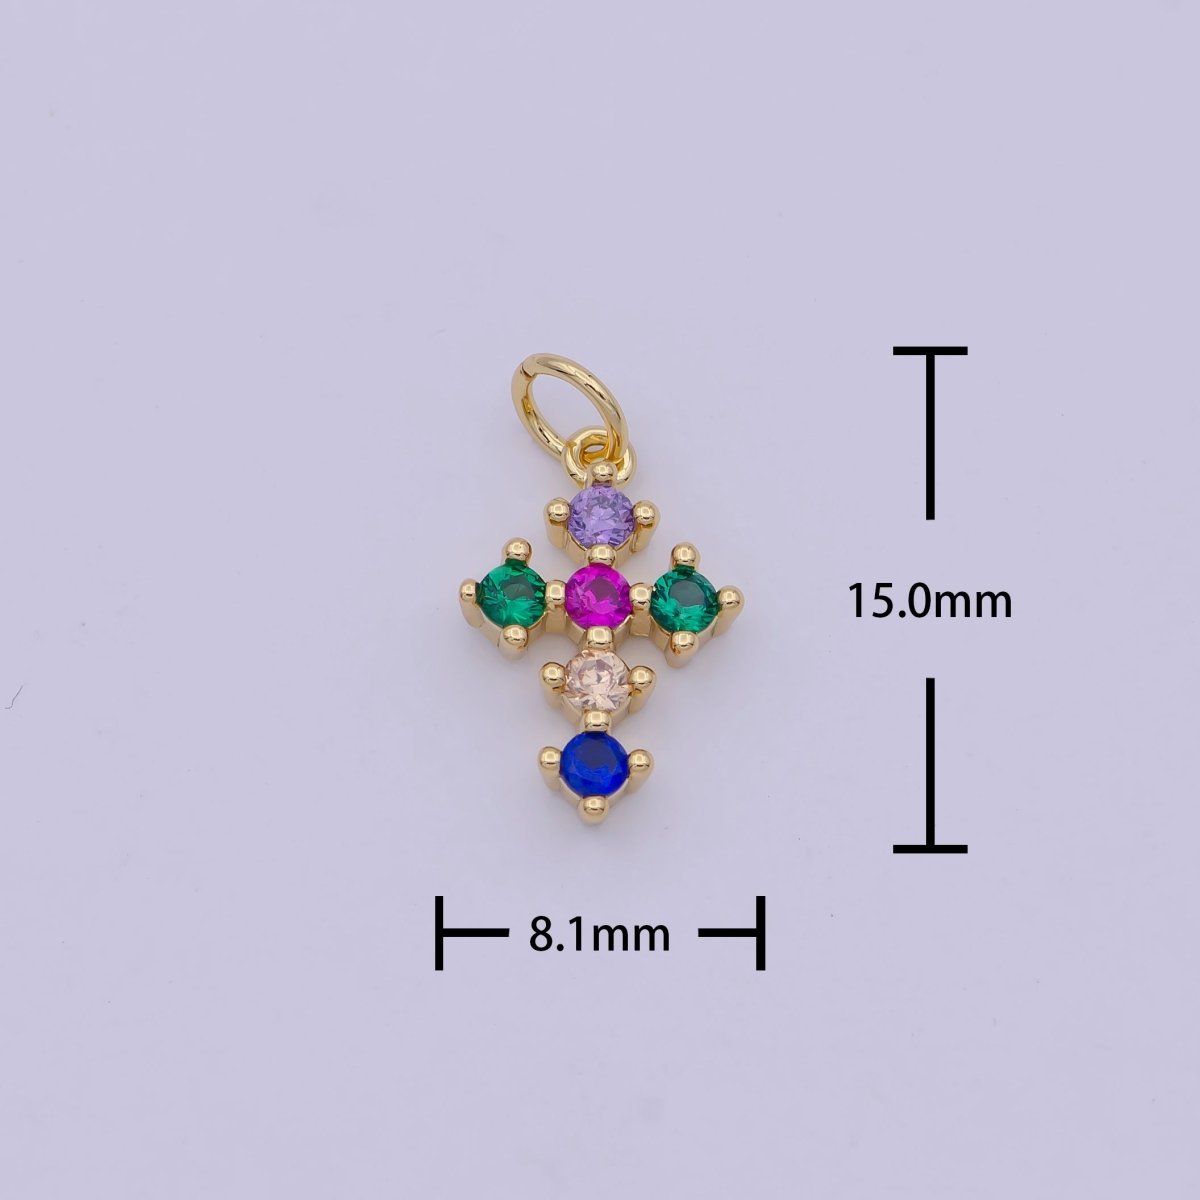 Mini CZ Gold Filled cross pendant, Tiny Cross Charm, DIY Religion Jewelry Making Findings N-415 N-416 - DLUXCA